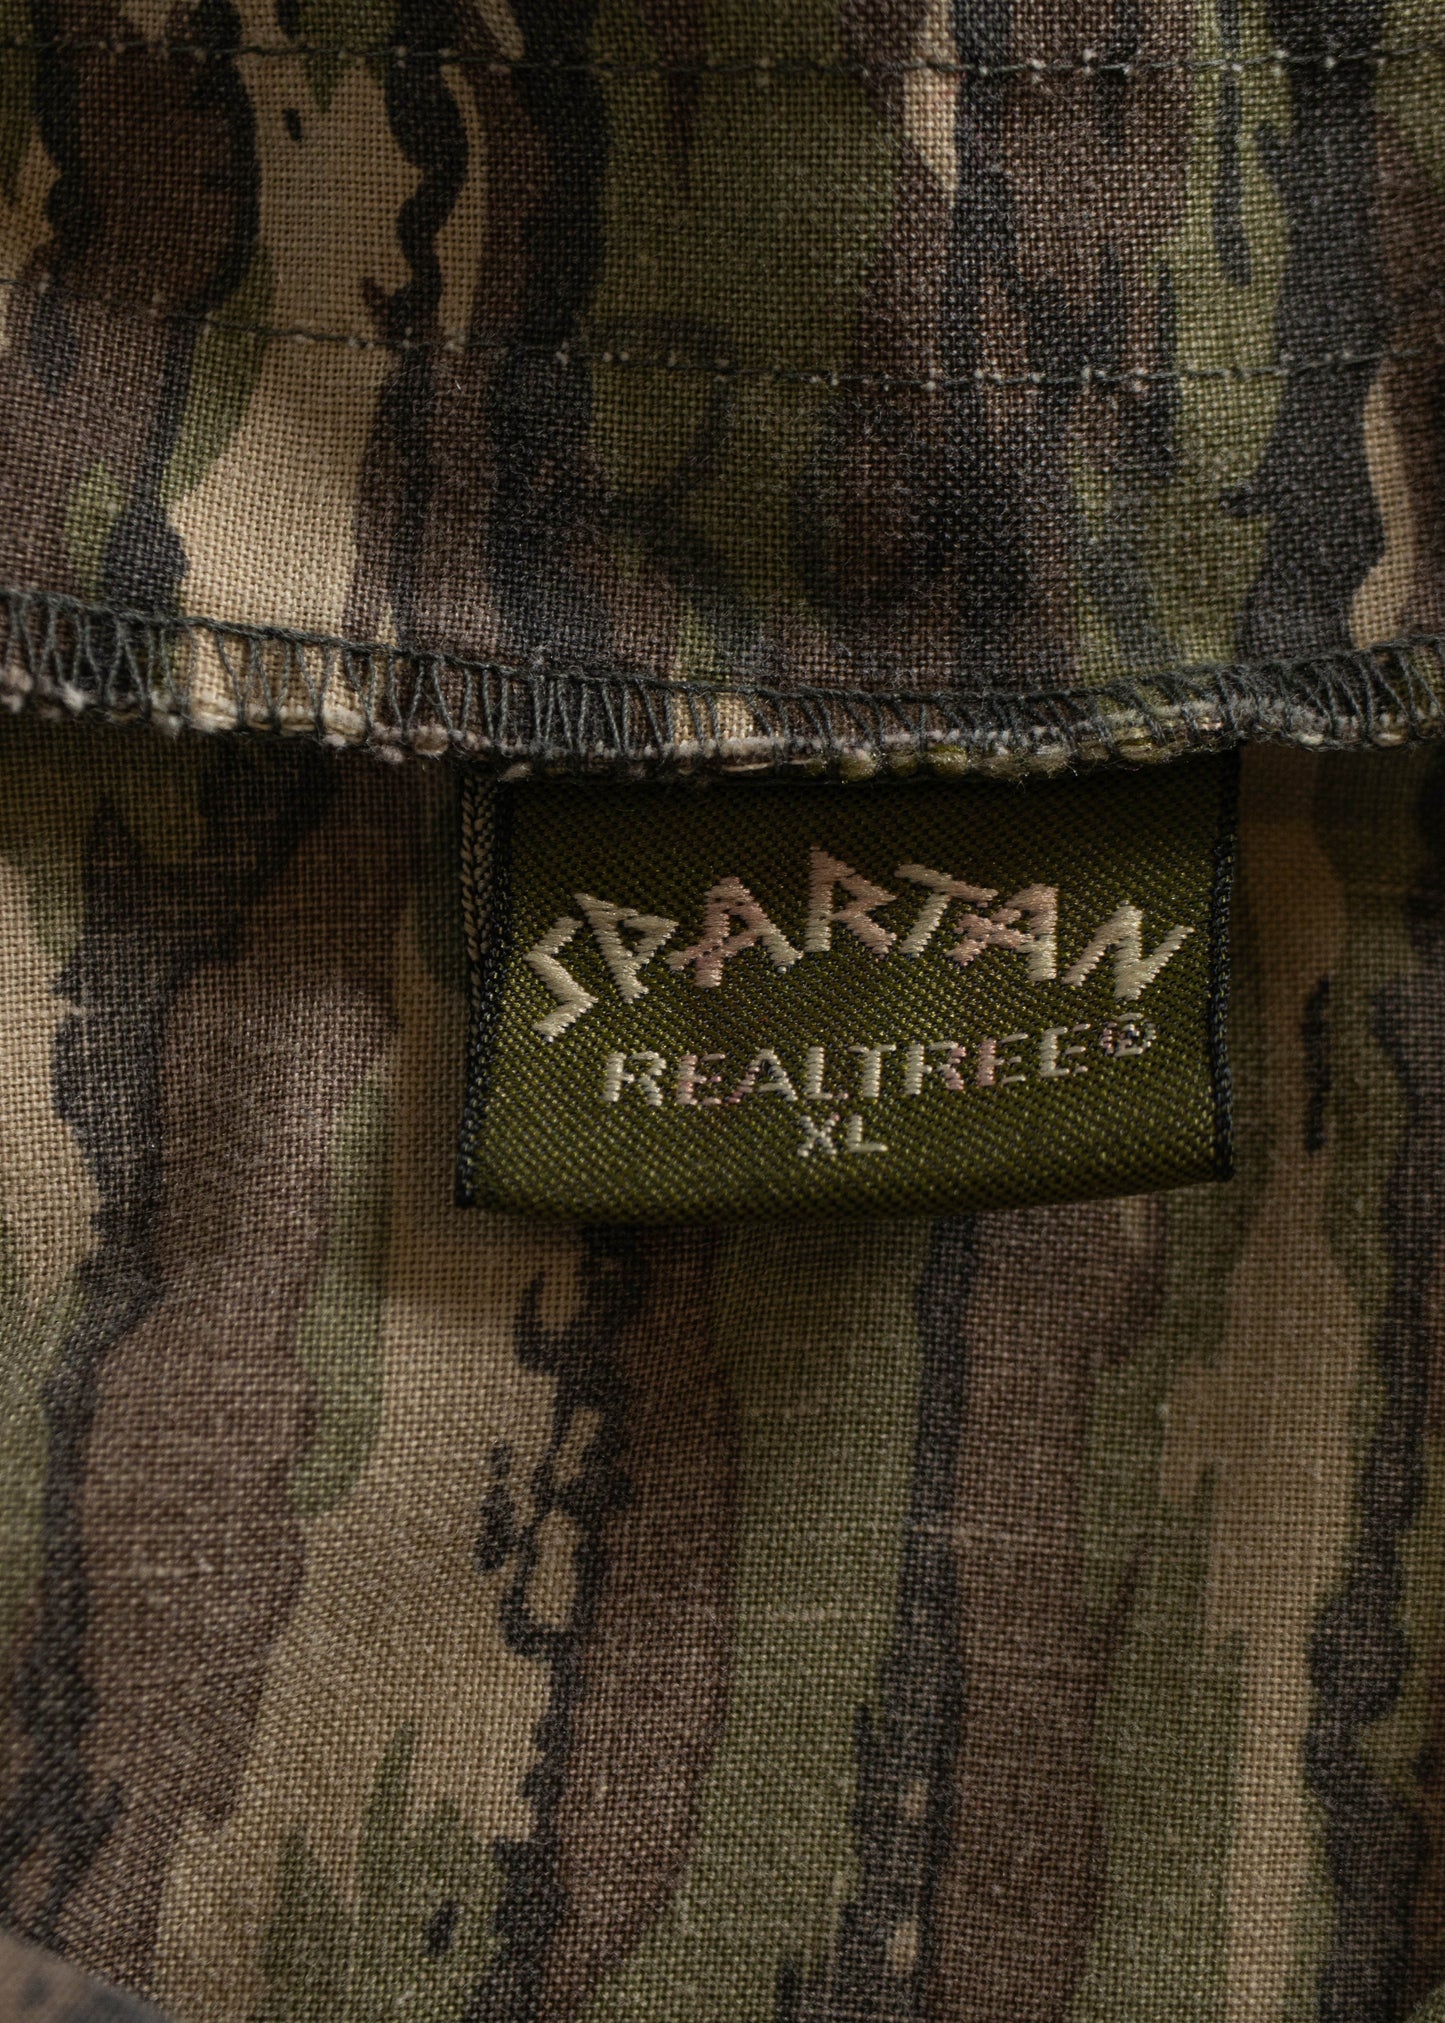 1980s Spartan Military Real Tree Camo Chore Coat Size L/XL